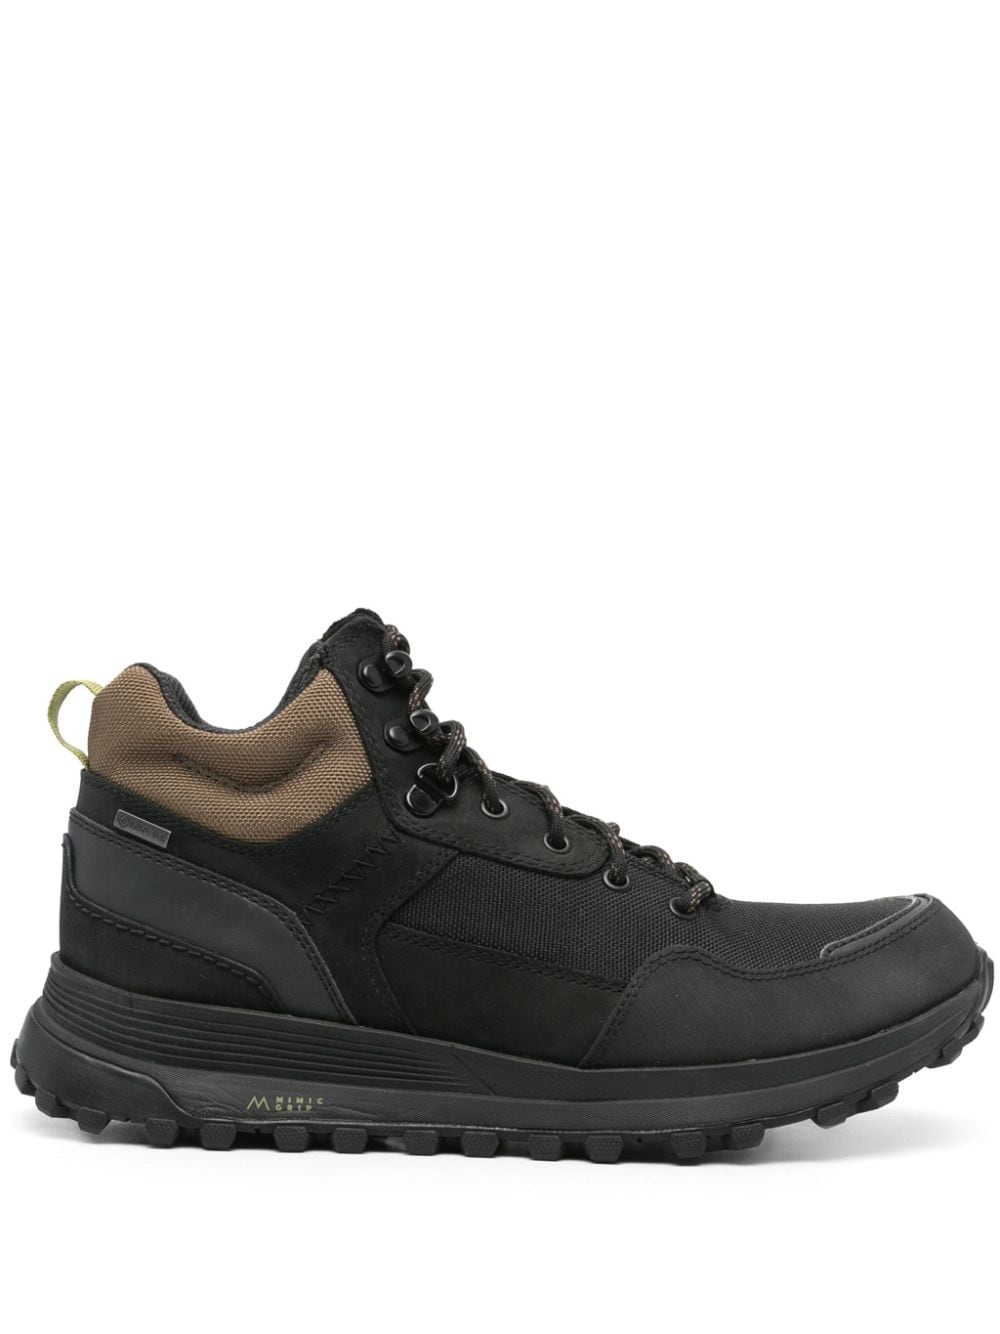 Clarks Atl Trek Hi Gtx Leather Boots In Black